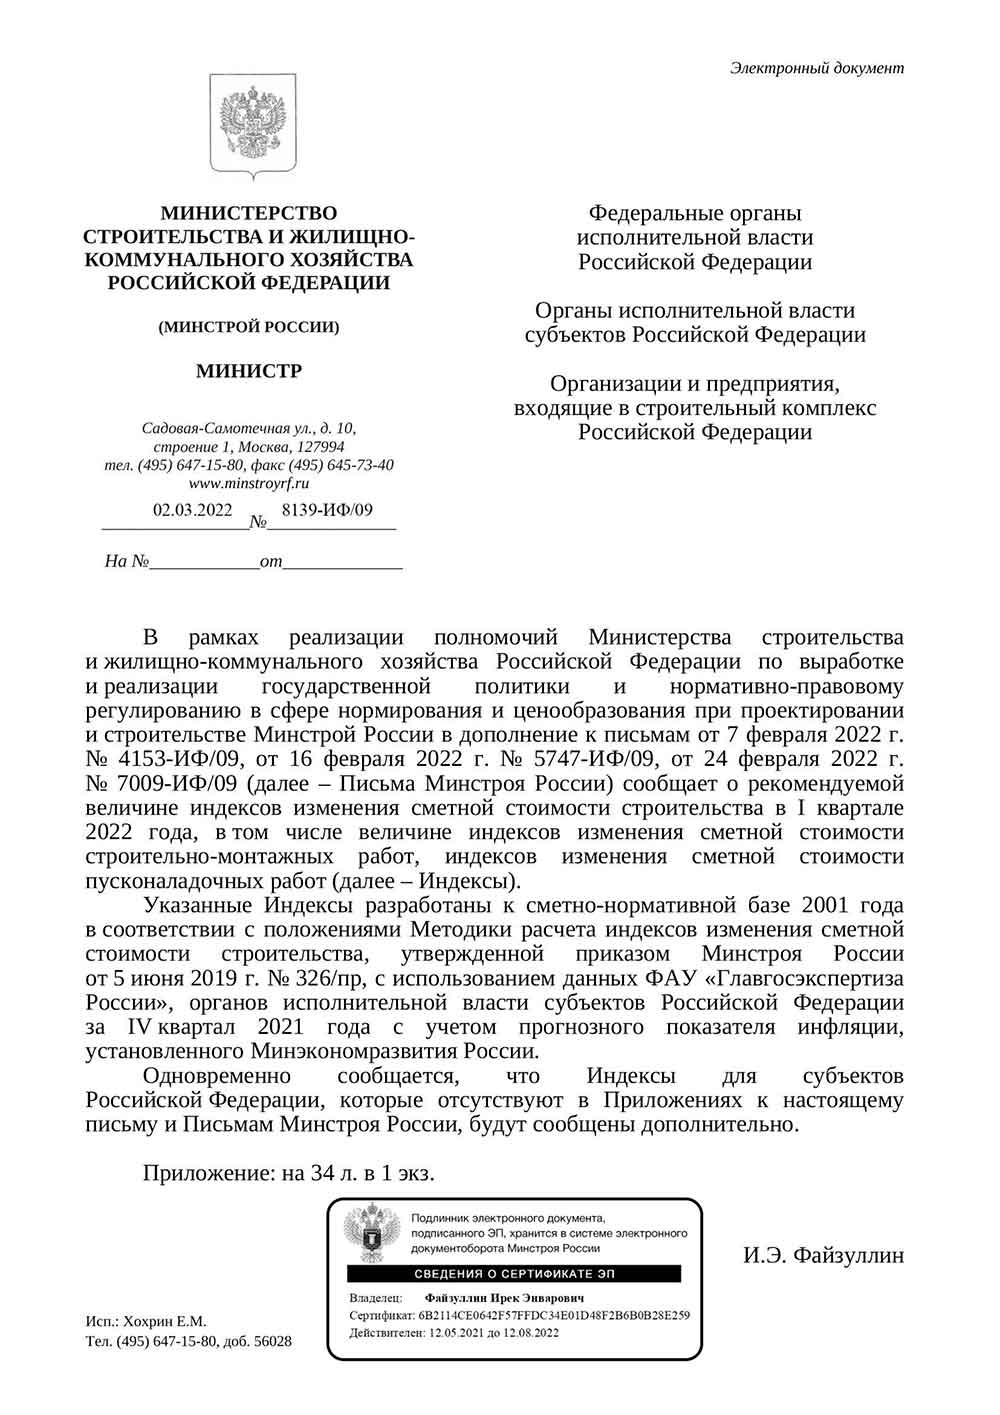 Письмо Минстроя РФ №8139-ИФ/09 от 02.03.2022 г.